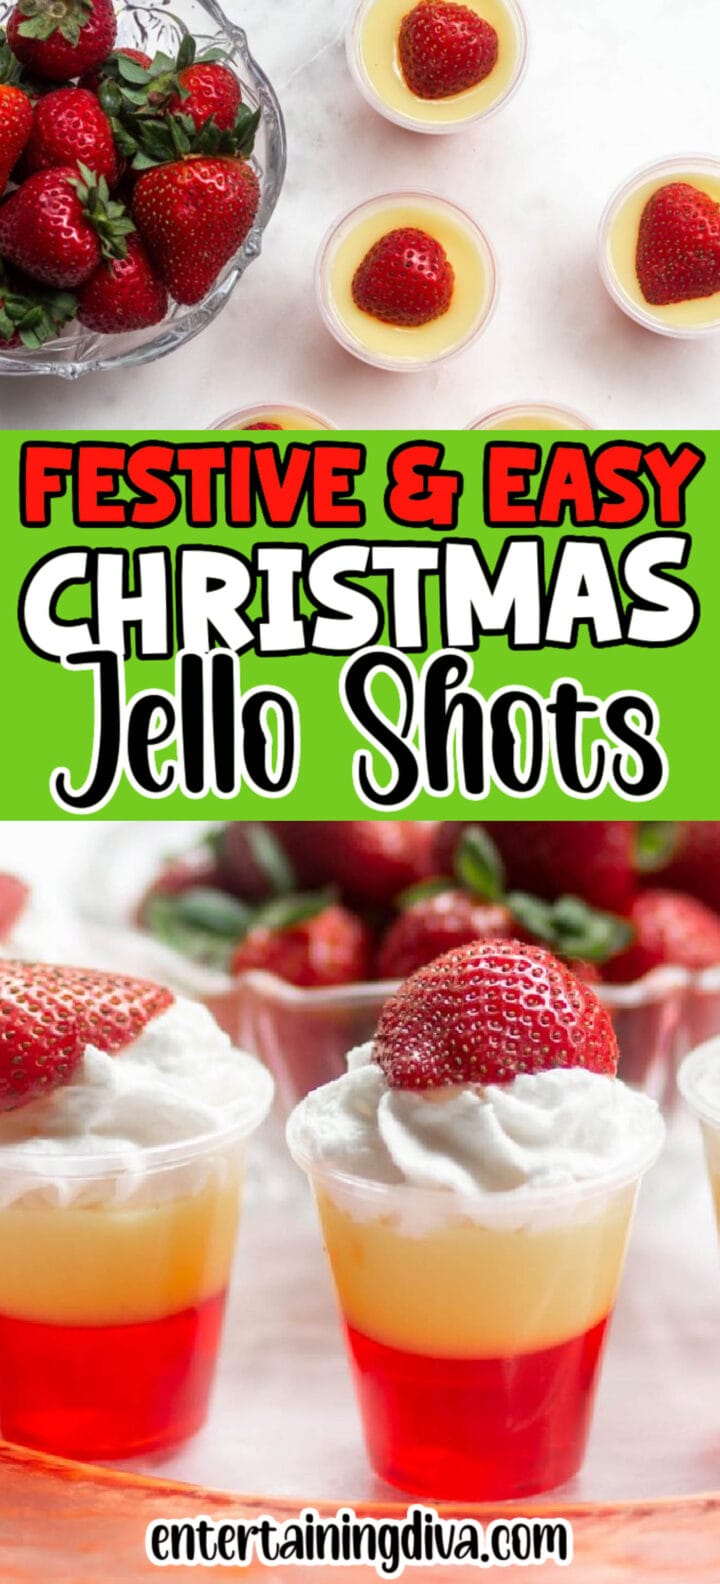 Festive and easy strawberries and cream layered Christmas jello shots.